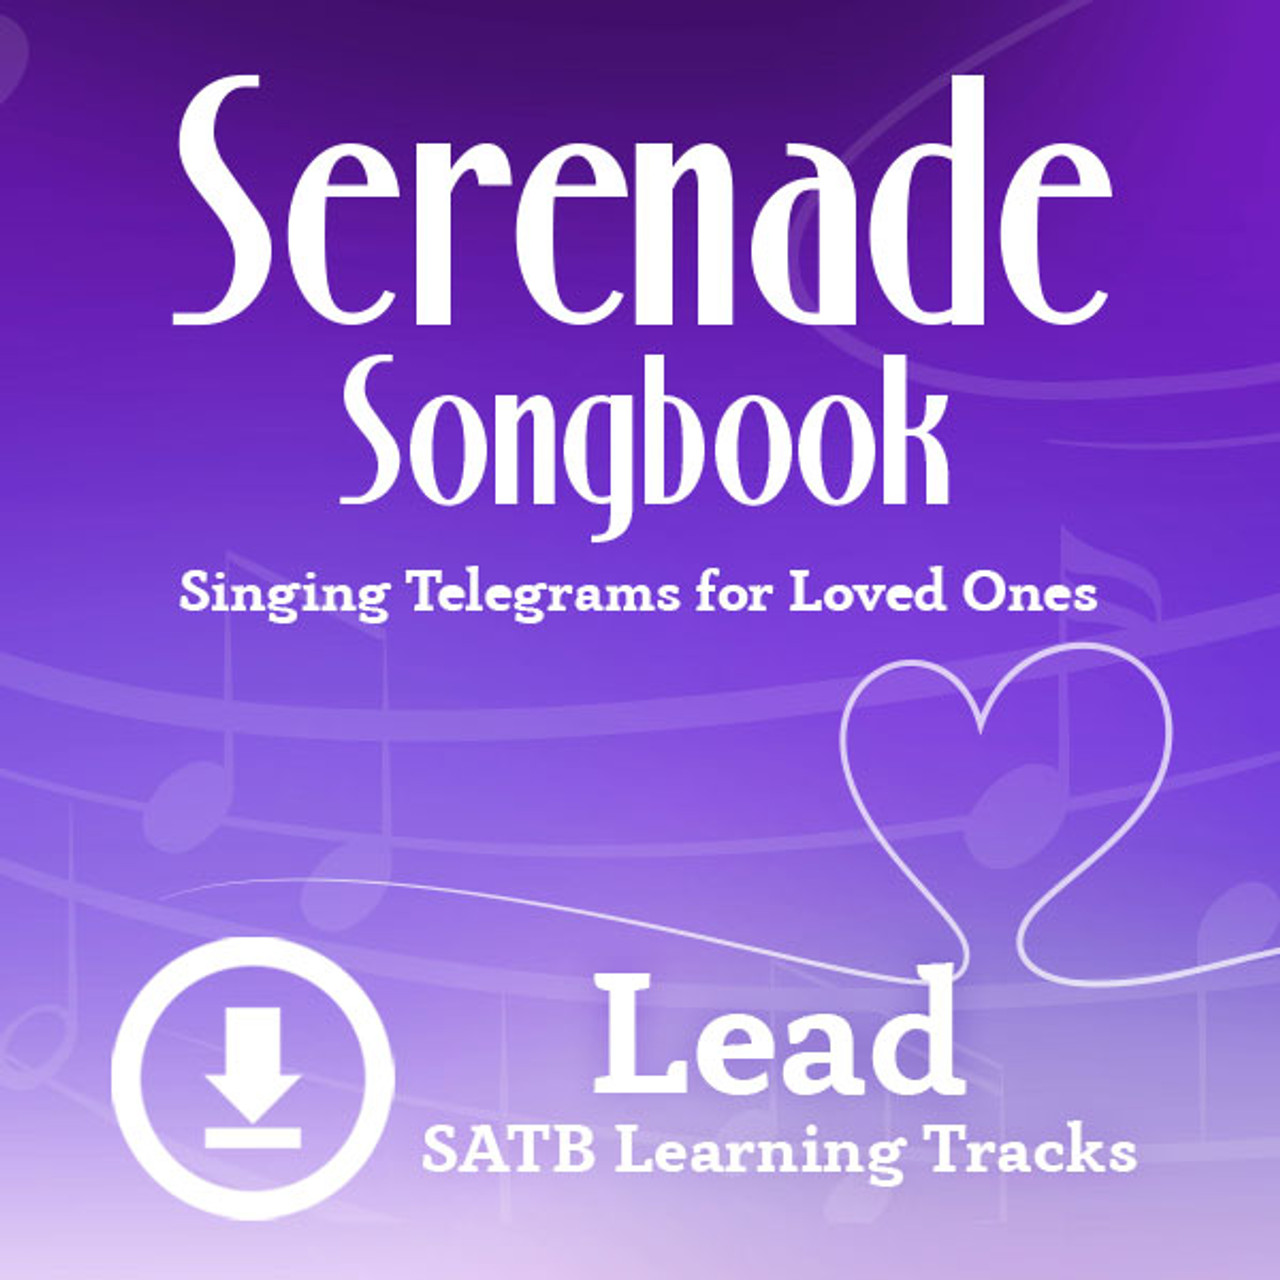 Serenade Songbook (SATB) (Lead) - Digital Learning Tracks for 214112